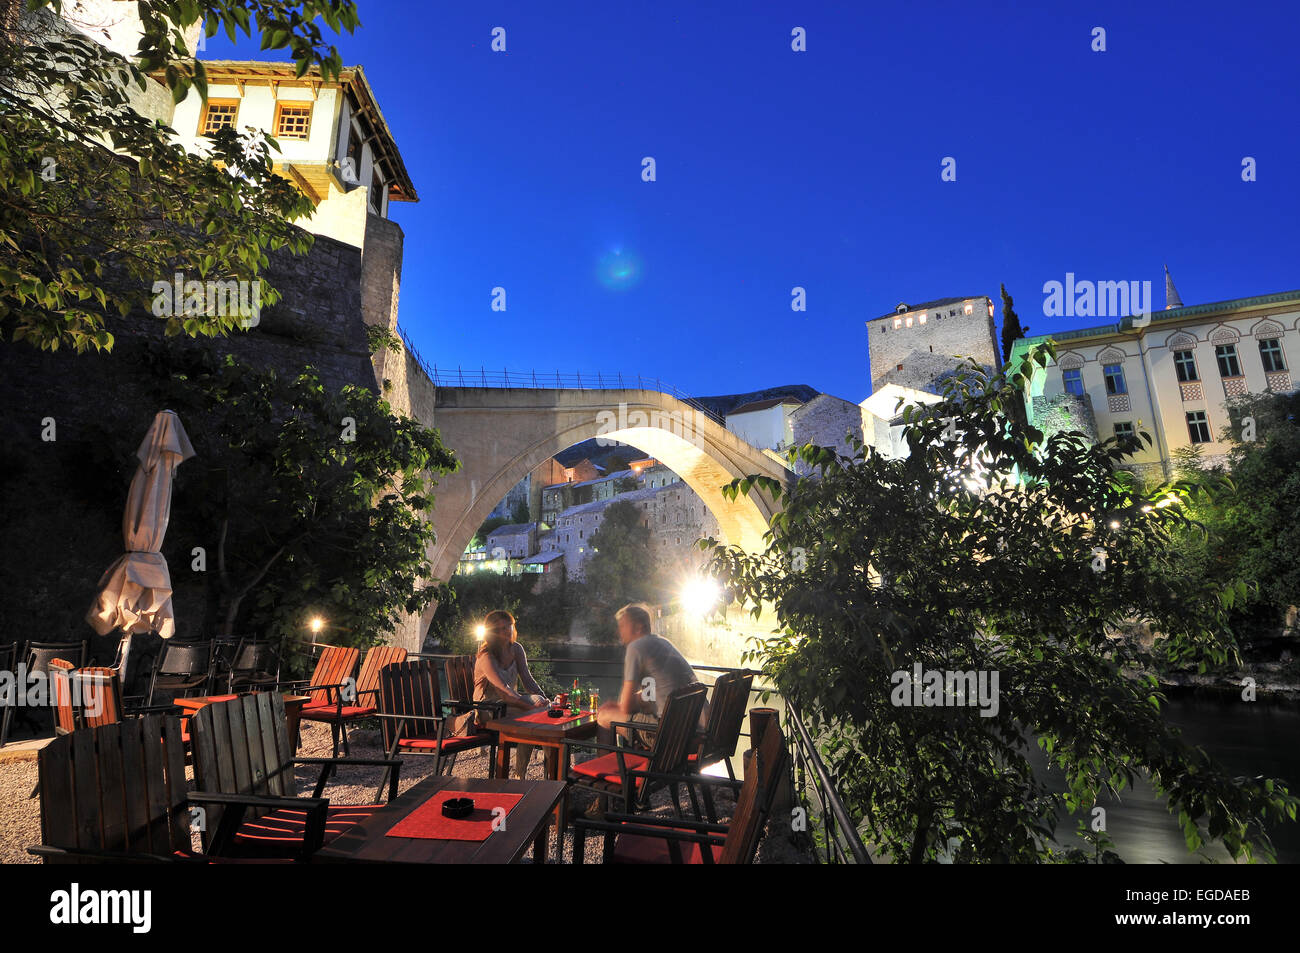 Restaurant at the old bridge at night, Mostar, Bosnia and Herzegovina Stock Photo